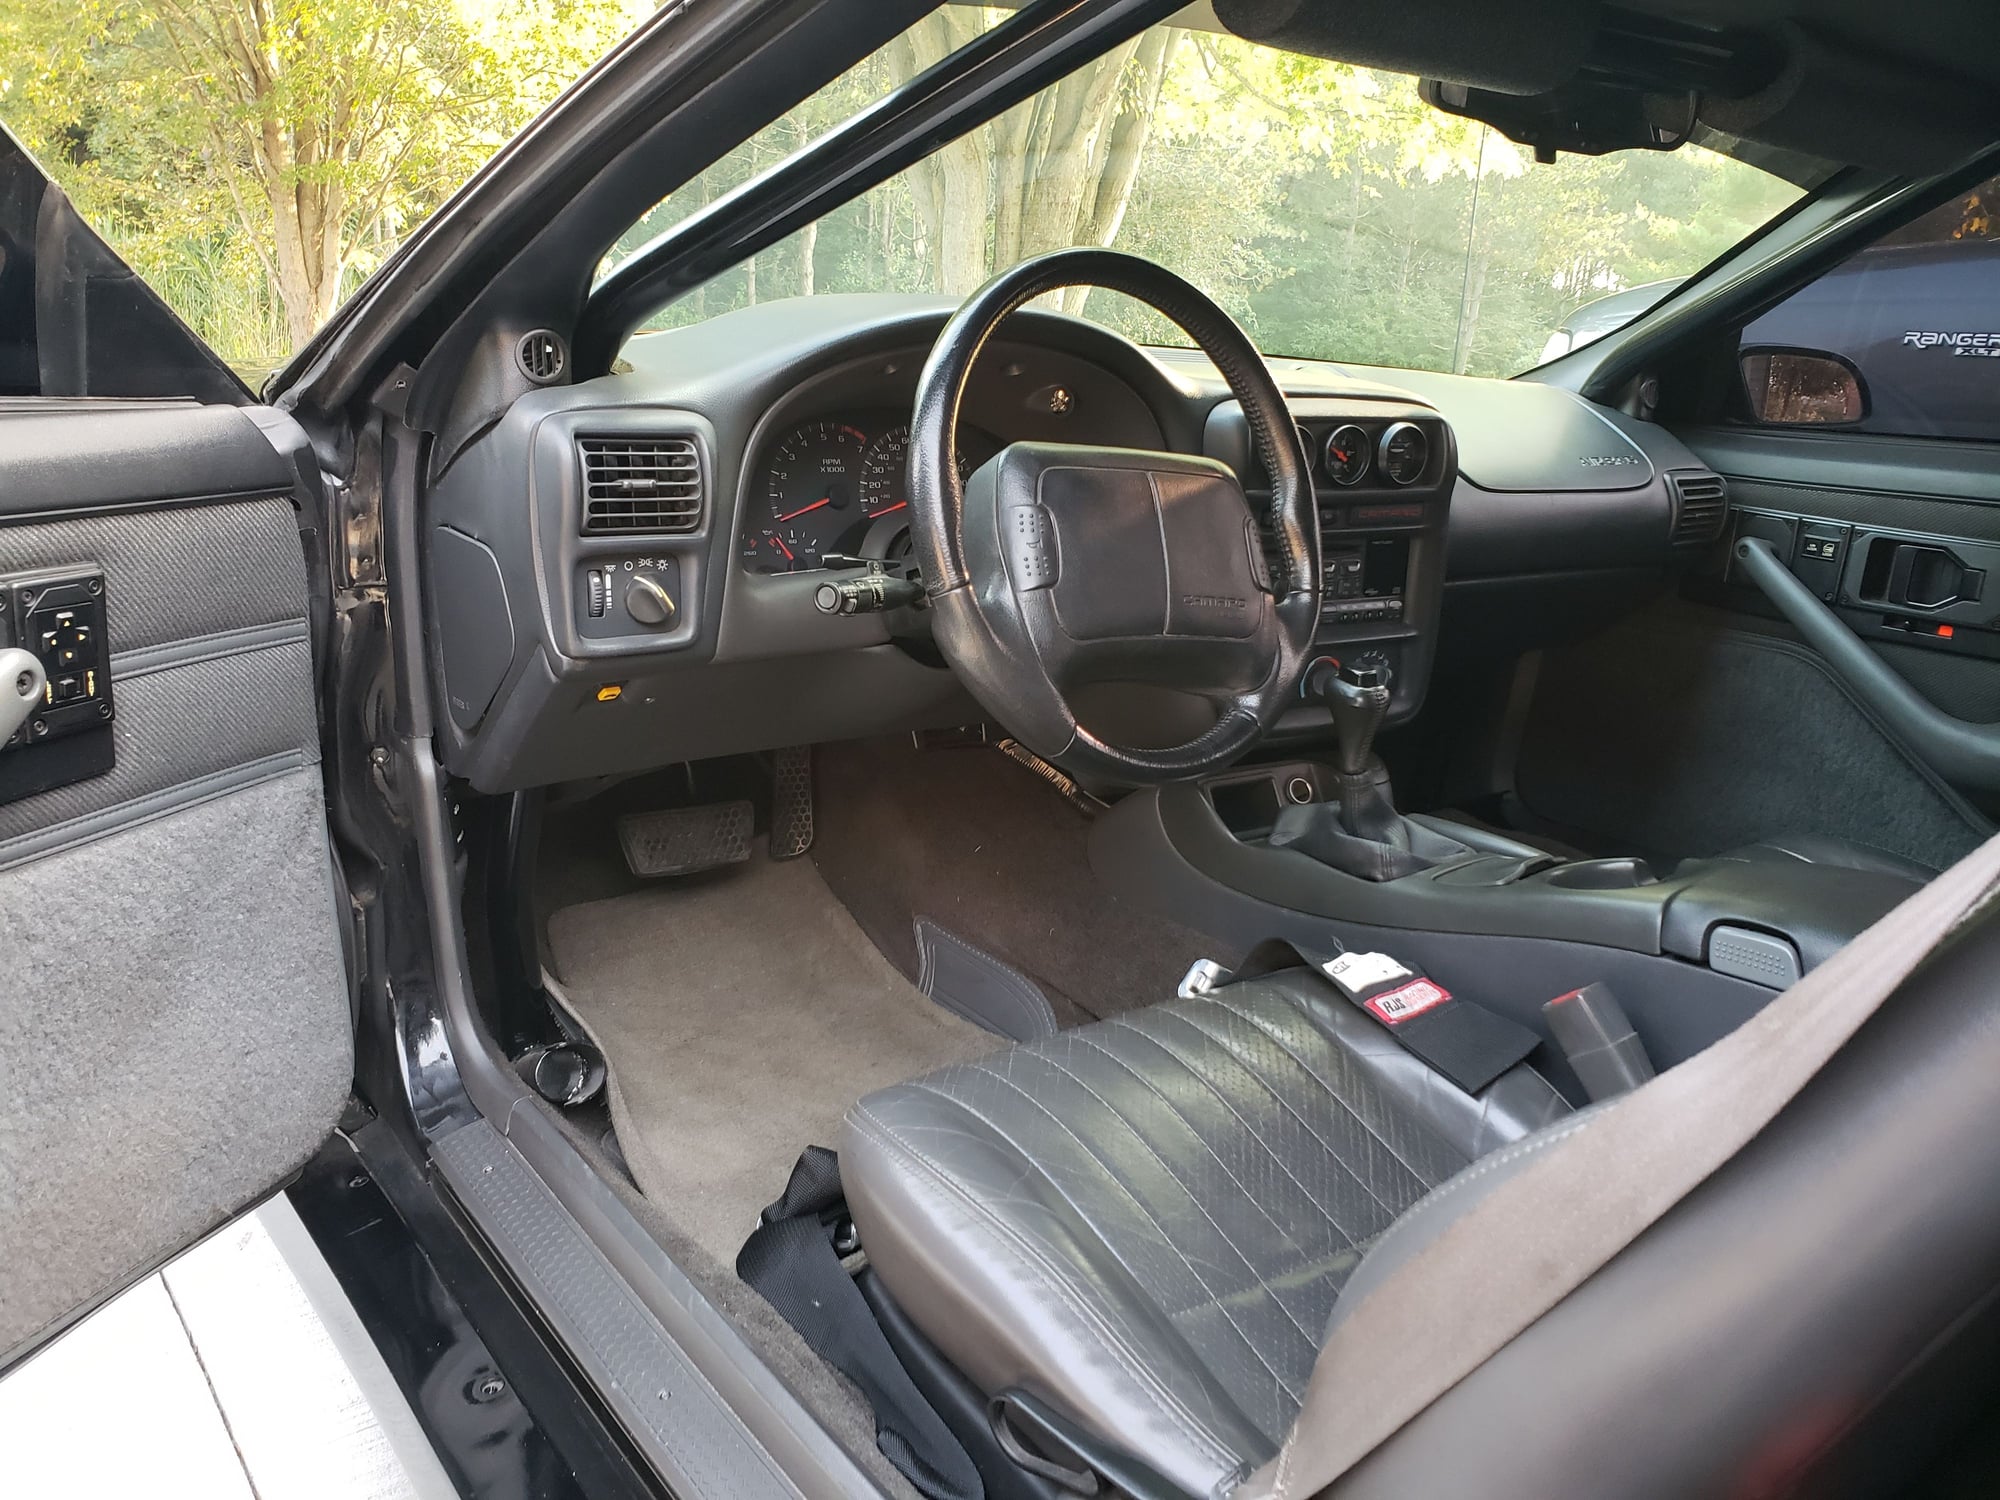 1991 Chevrolet Camaro - 1991 Camaro Z28 ROLLER set up for turbo LS & 4l80e - Used - Marine City, MI 48039, United States